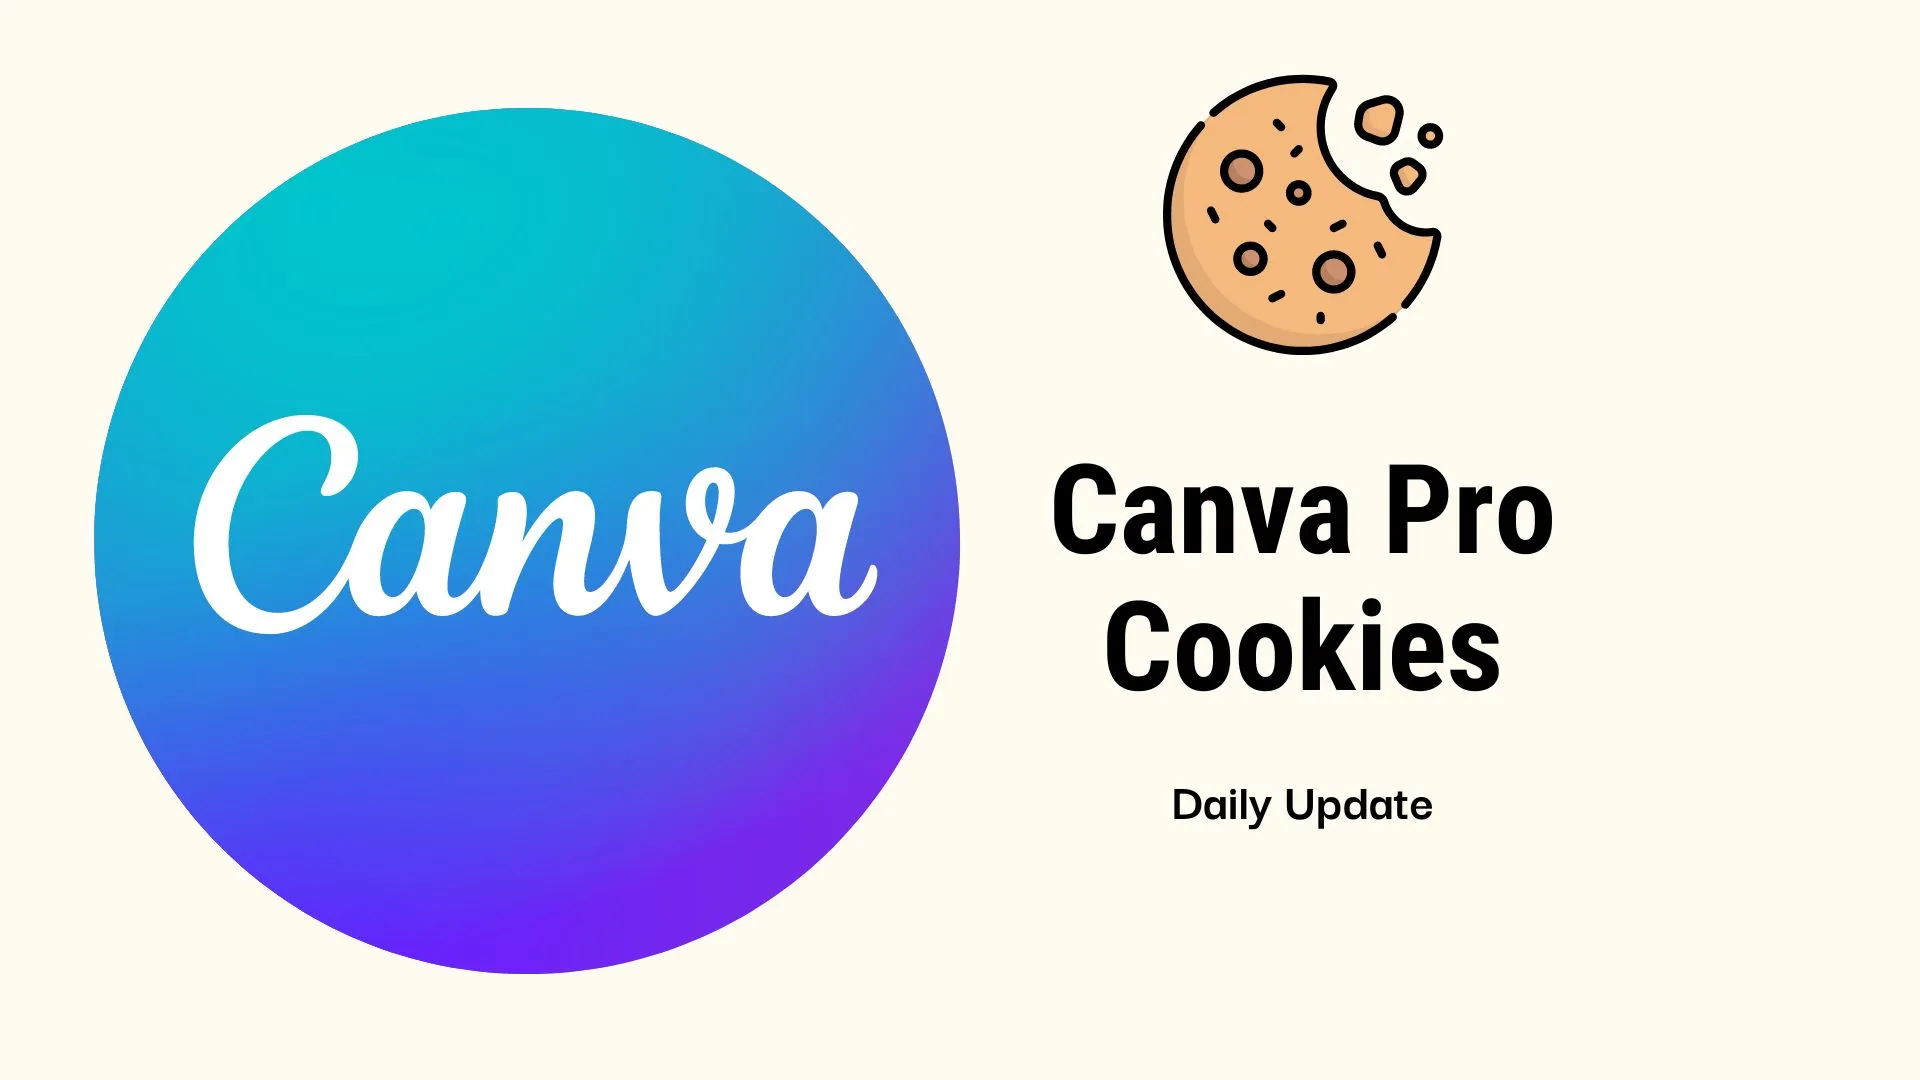 Canva Pro Cookies